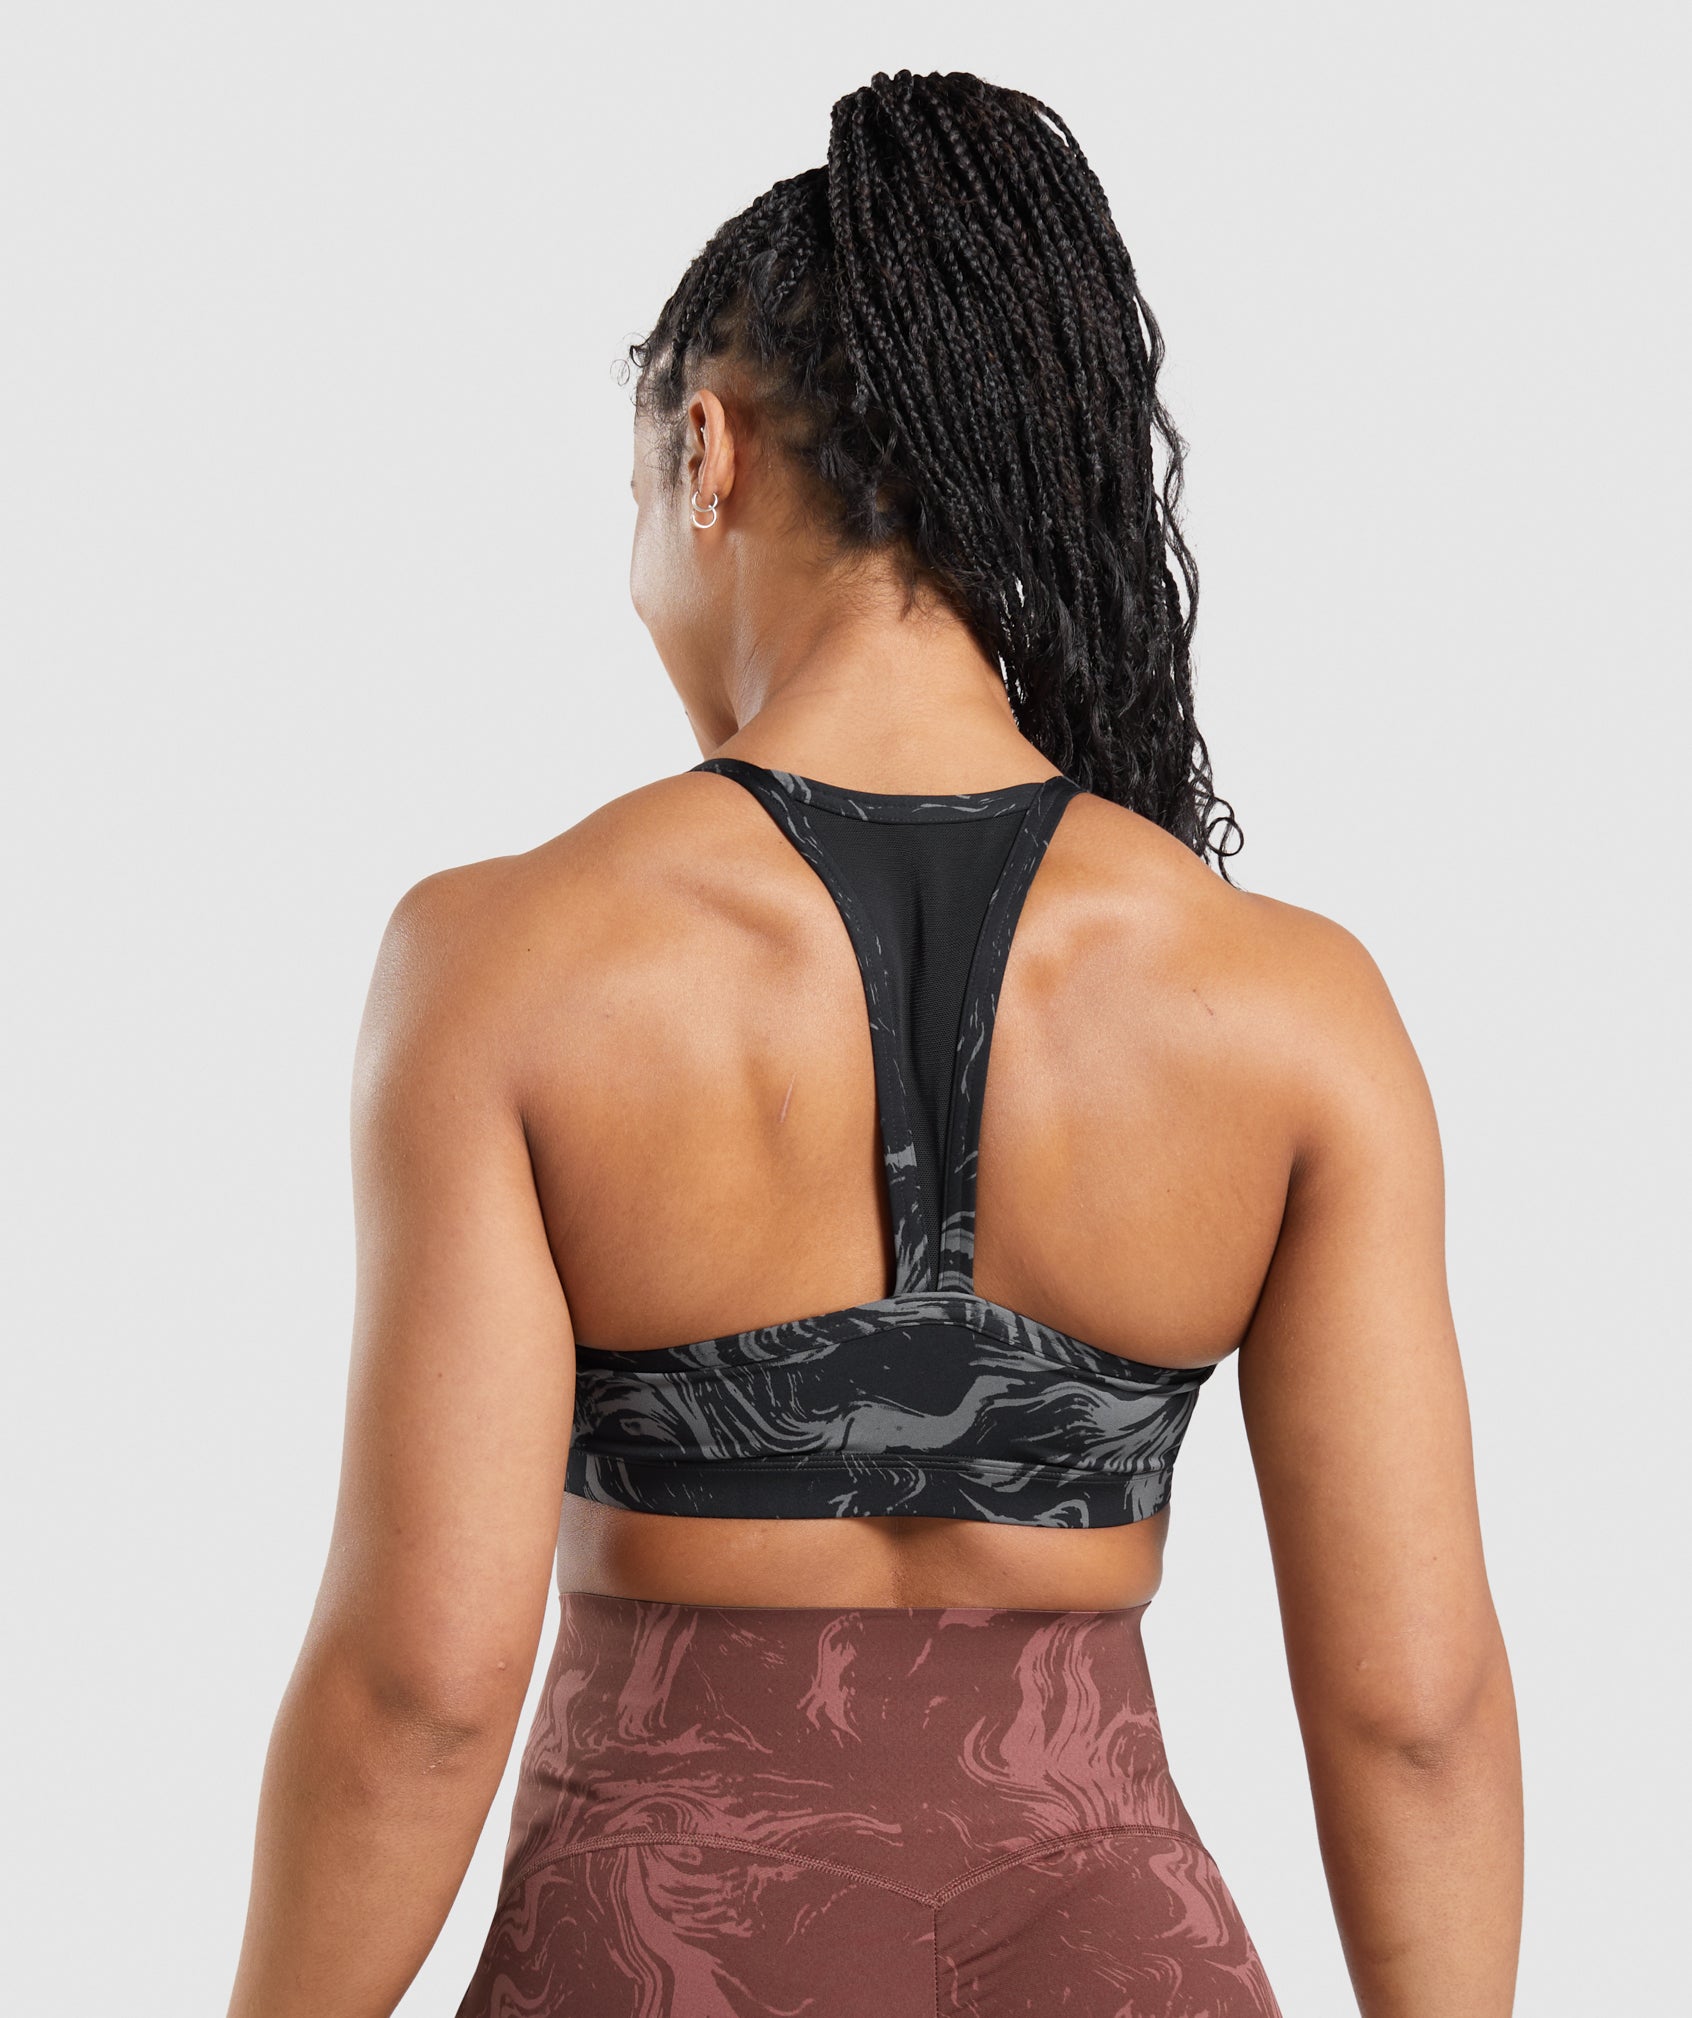 2 BRAND NEW w/ tags Gymshark Sports bras, black & brown, size Medium